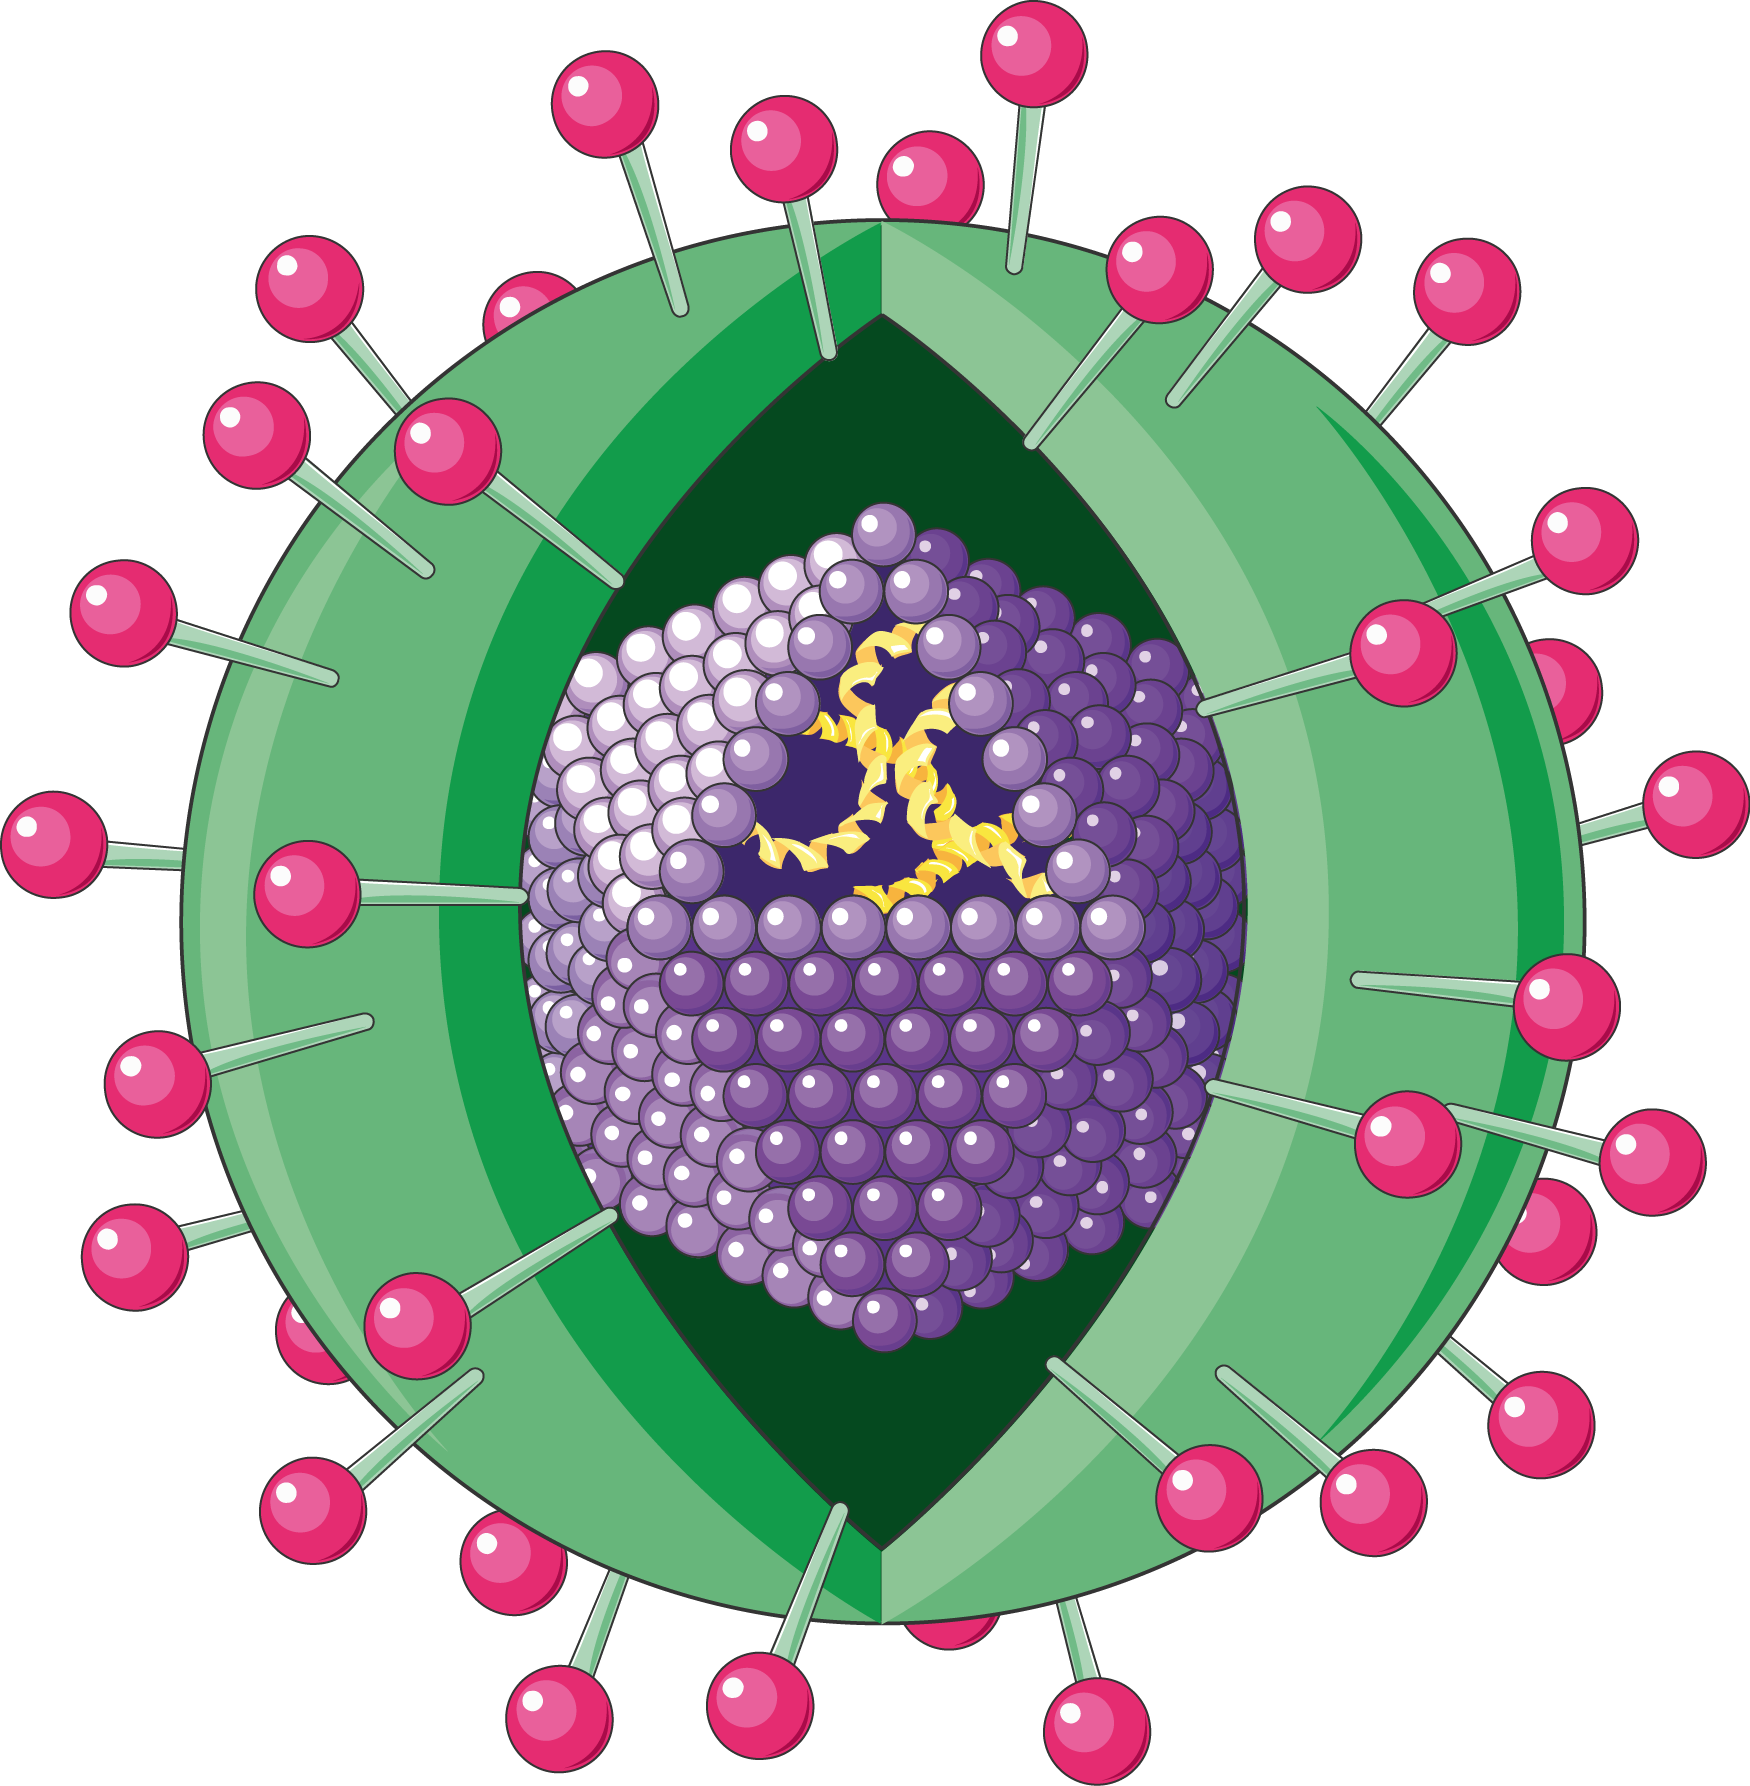 hepatitis a virus